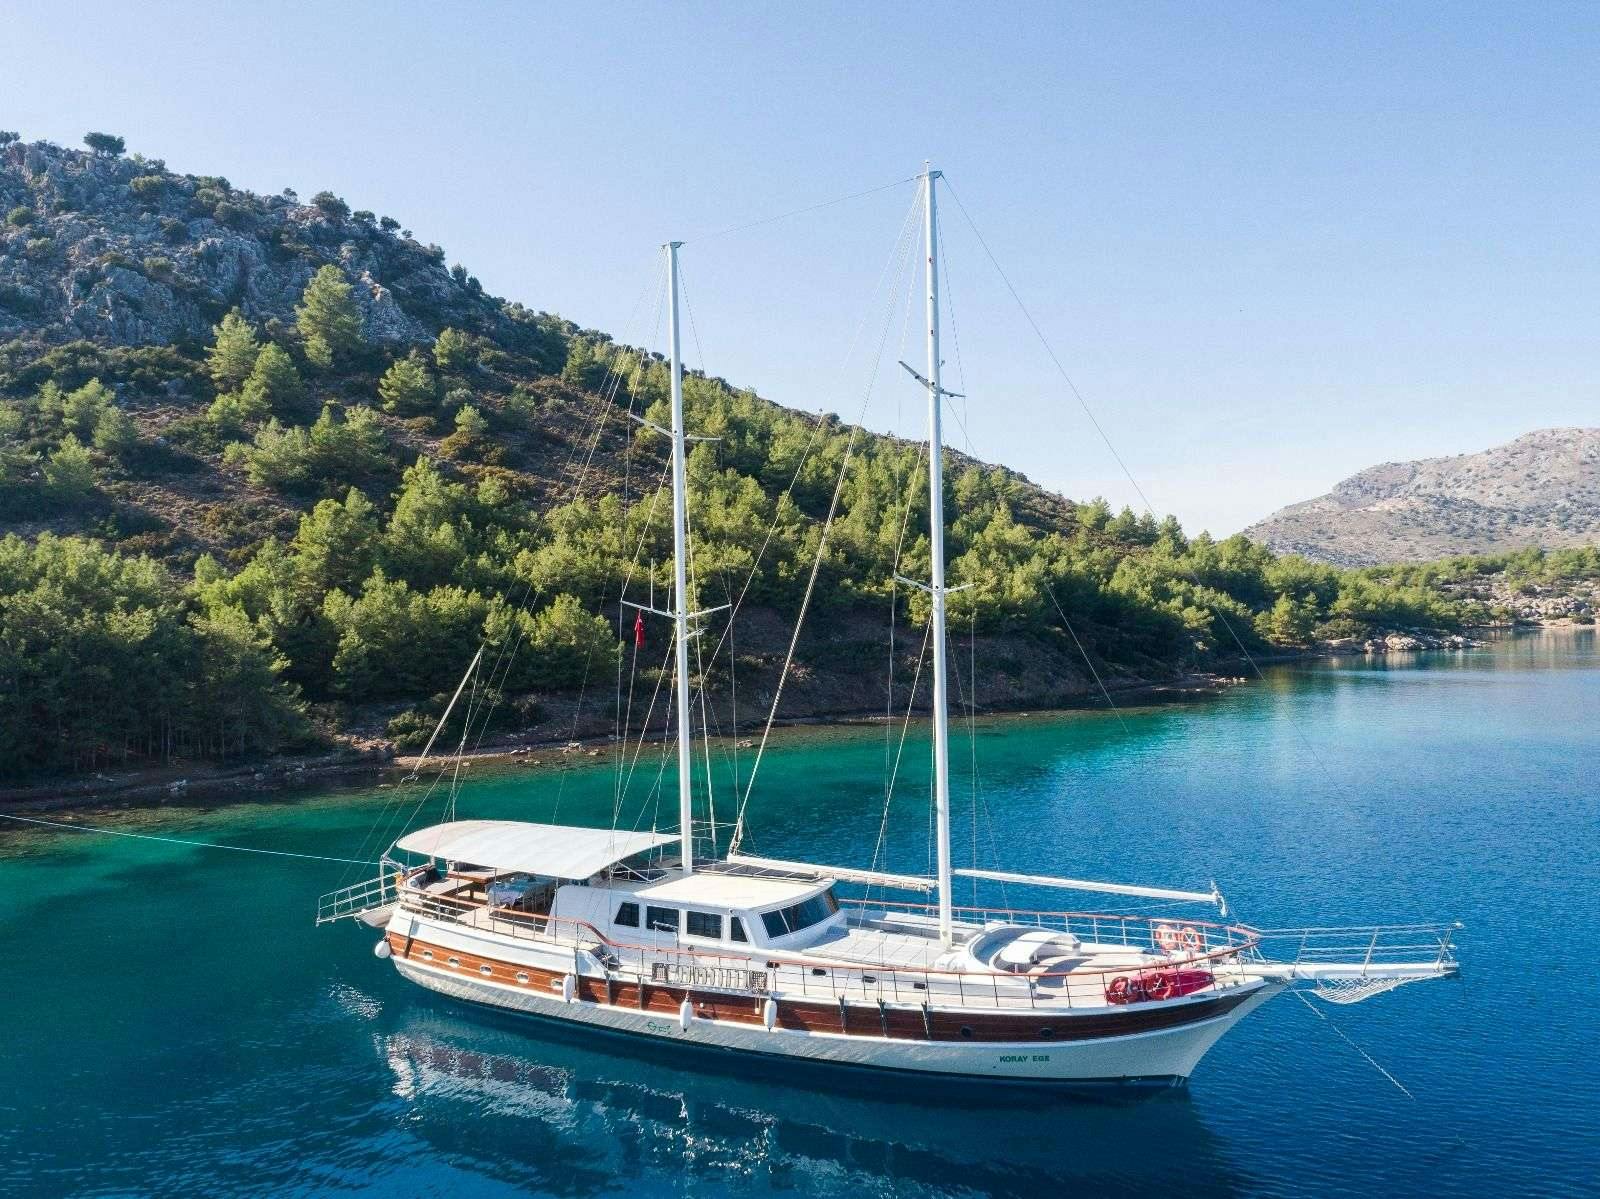 koray ege - Yacht Charter Abaco Islands & Boat hire in Greece & Turkey 1